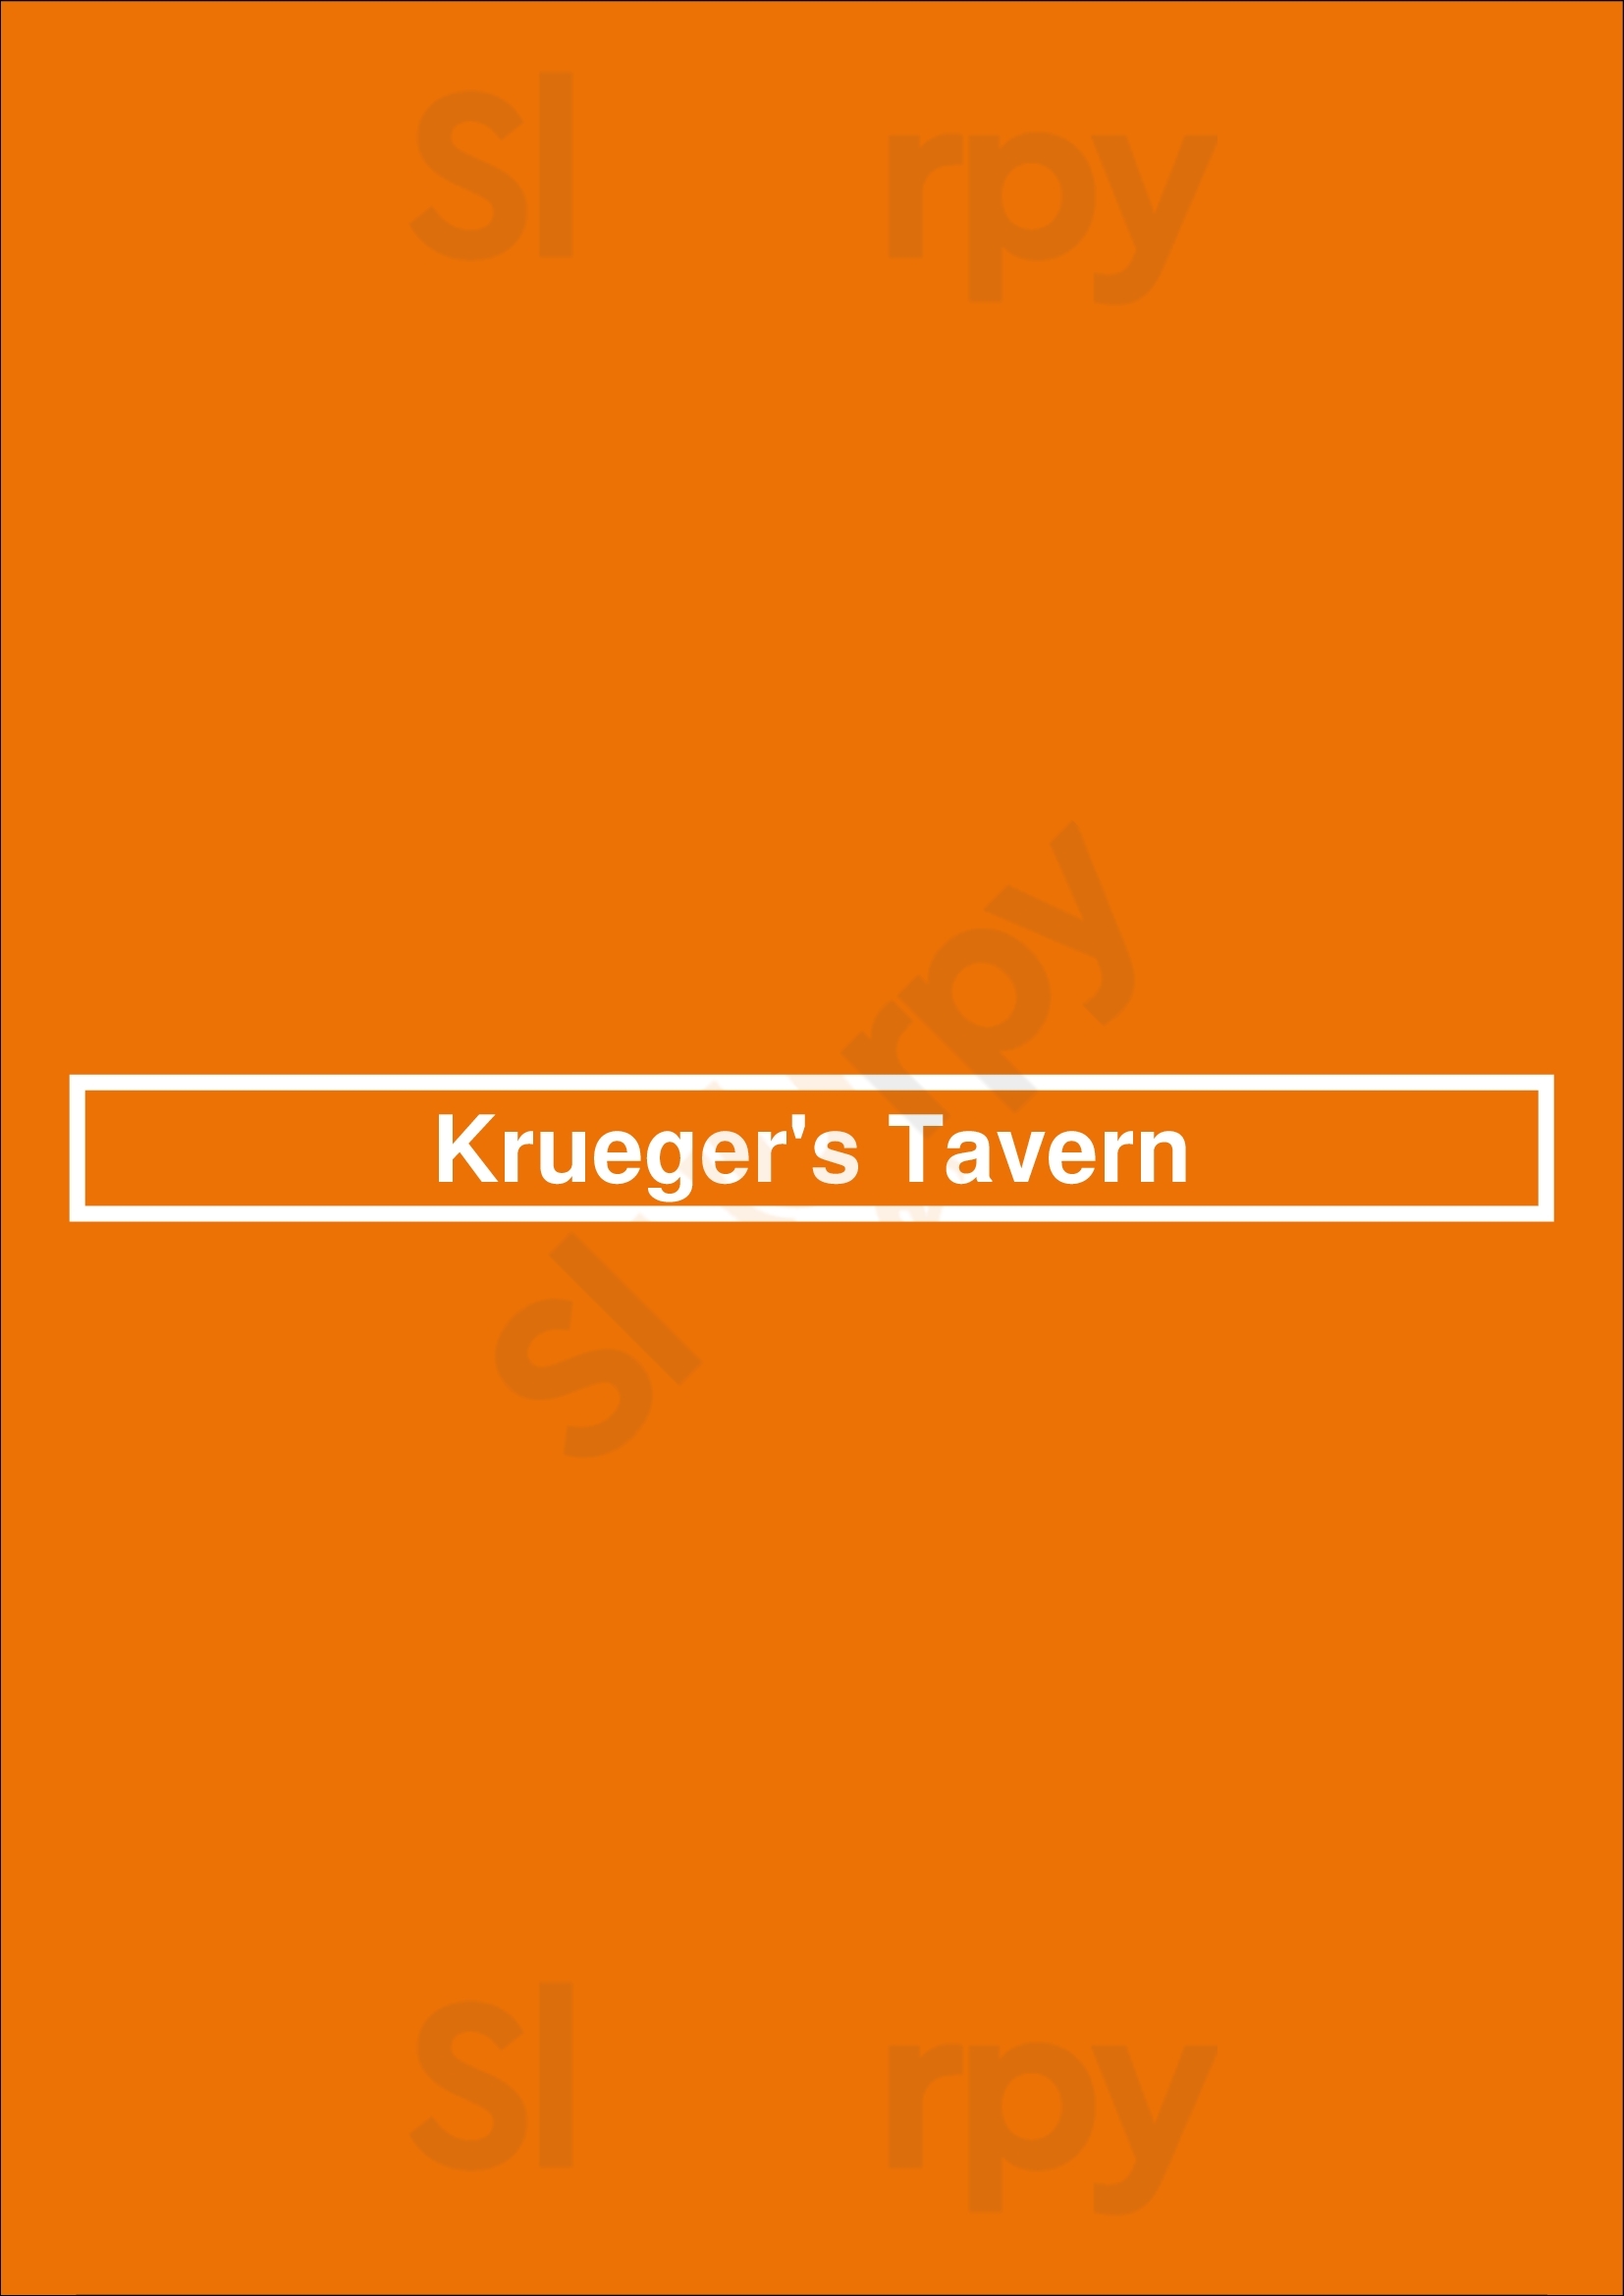 Krueger's Tavern Cincinnati Menu - 1